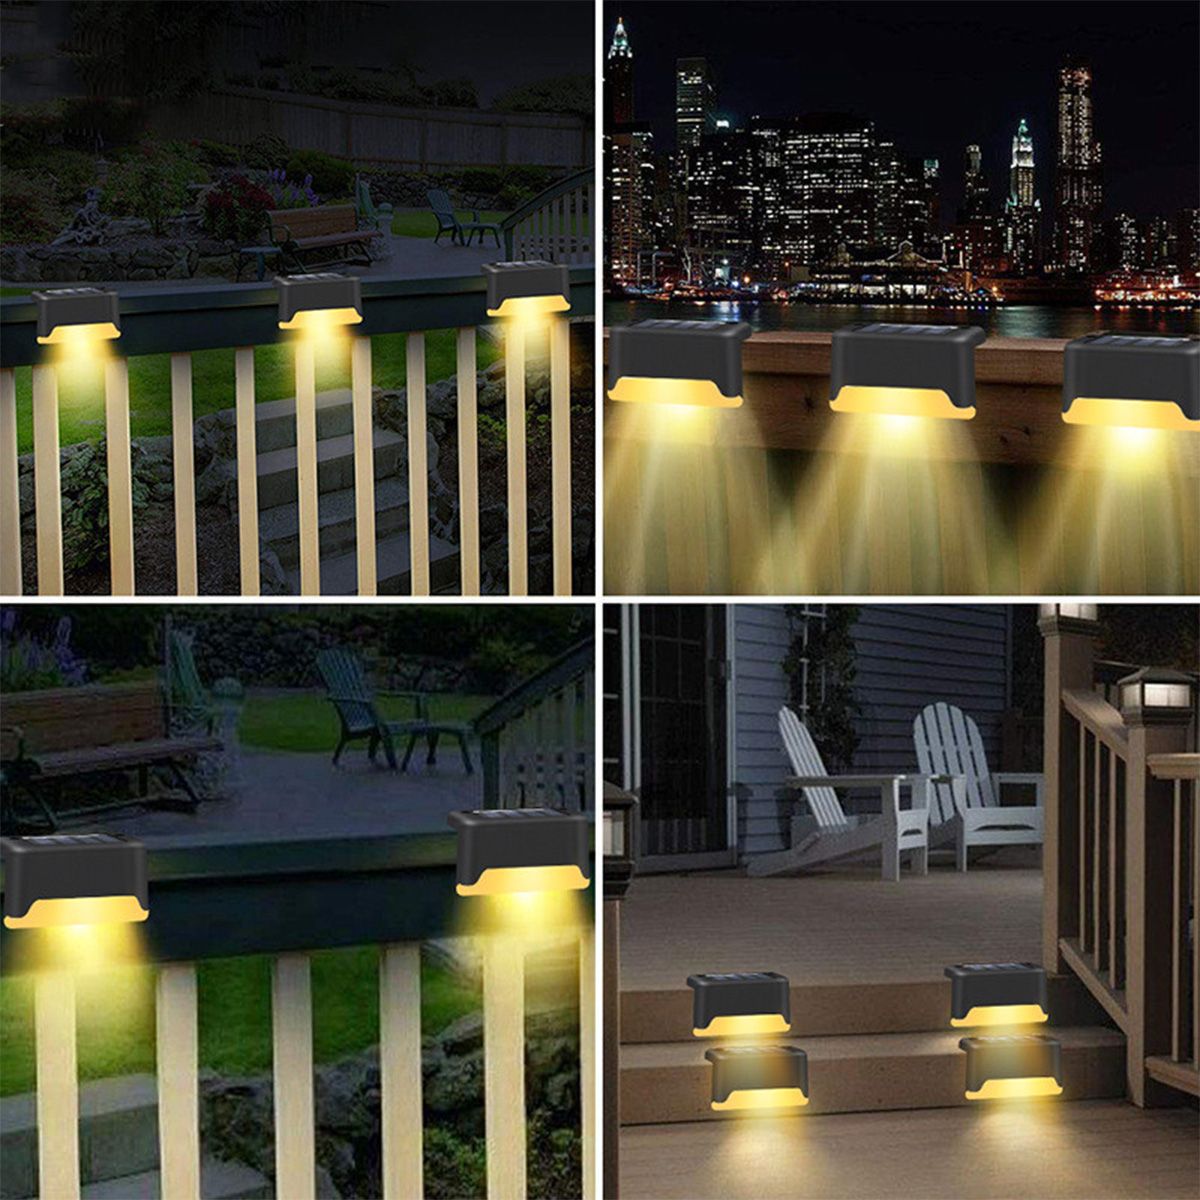 Outdoor-LED-Solar-Lawn-Light-Warm-White-Path-Stair-Waterproof-Wall-Garden-Landscape-Lamp-1706715